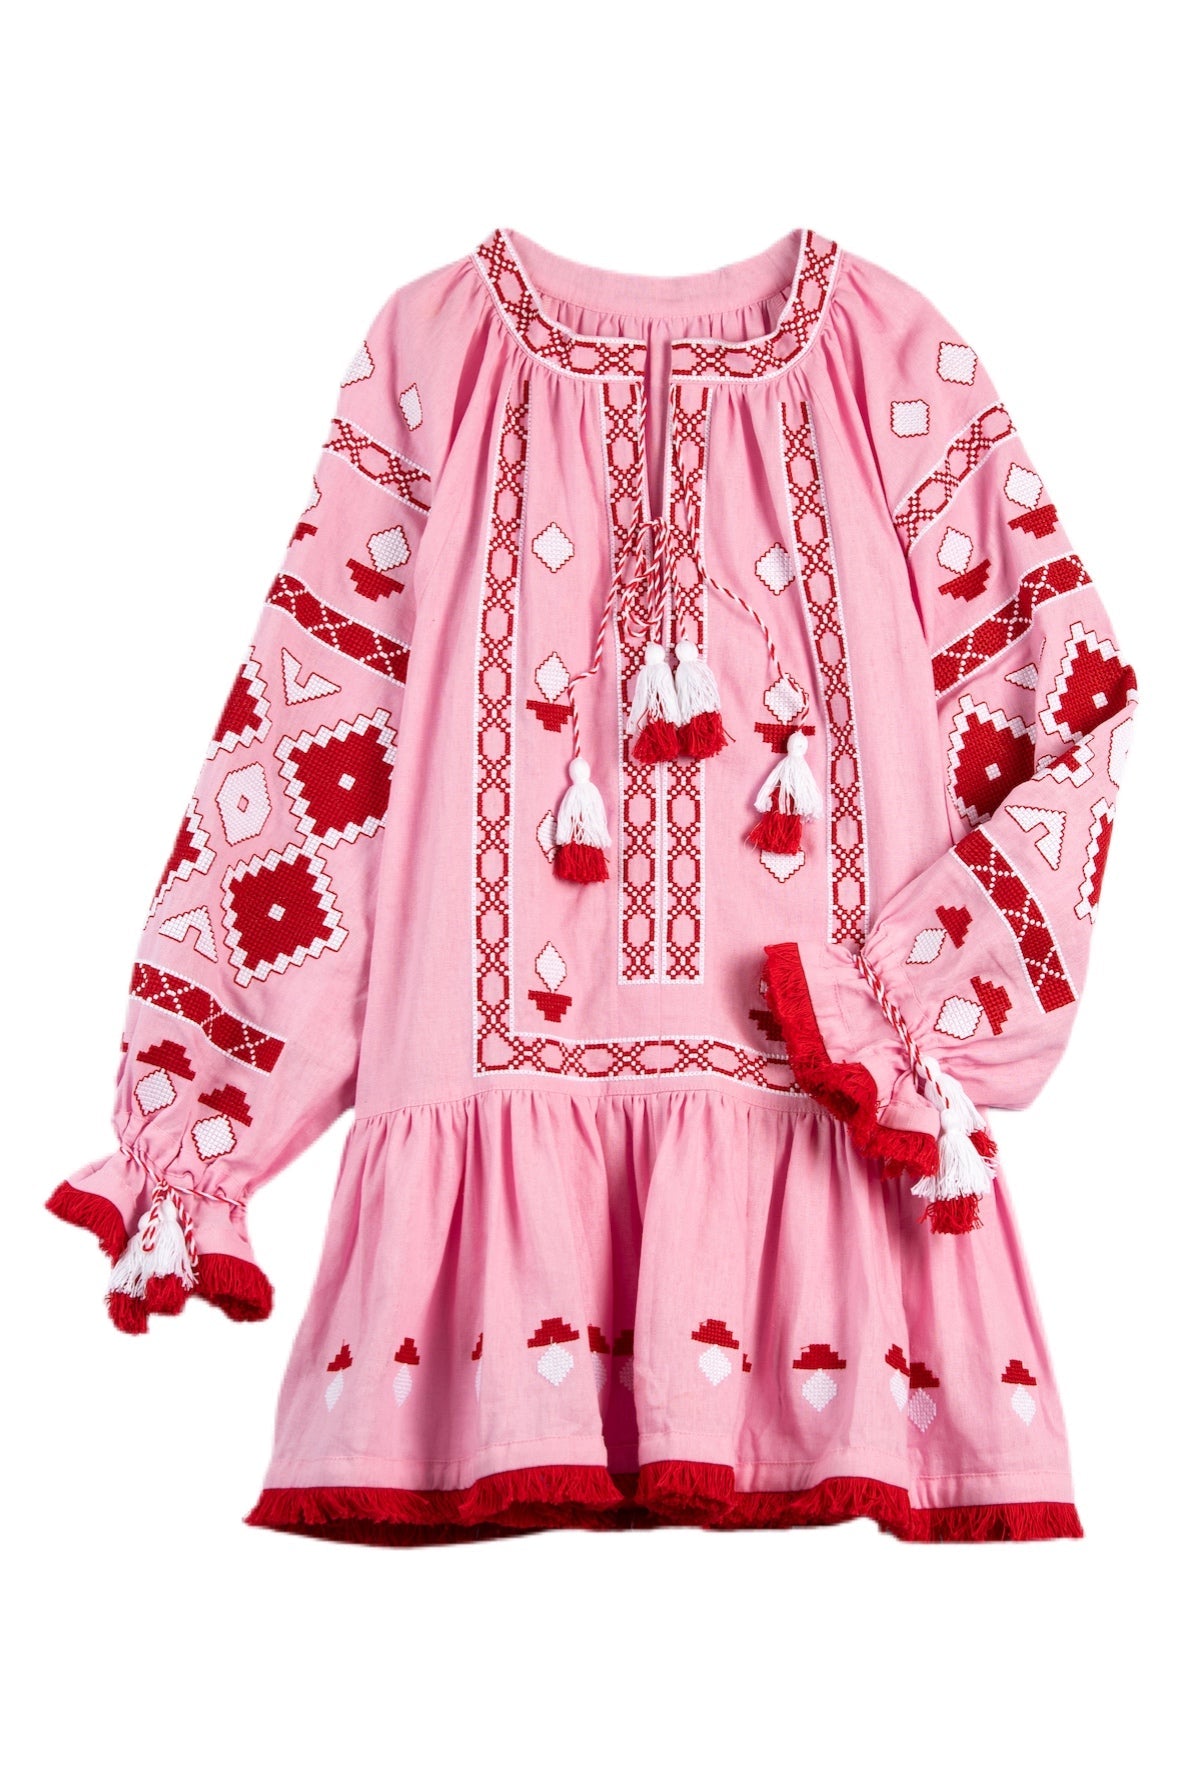 Nomeda Embroidered Ukrainian Dress - Pink, Red by Larkin Lane